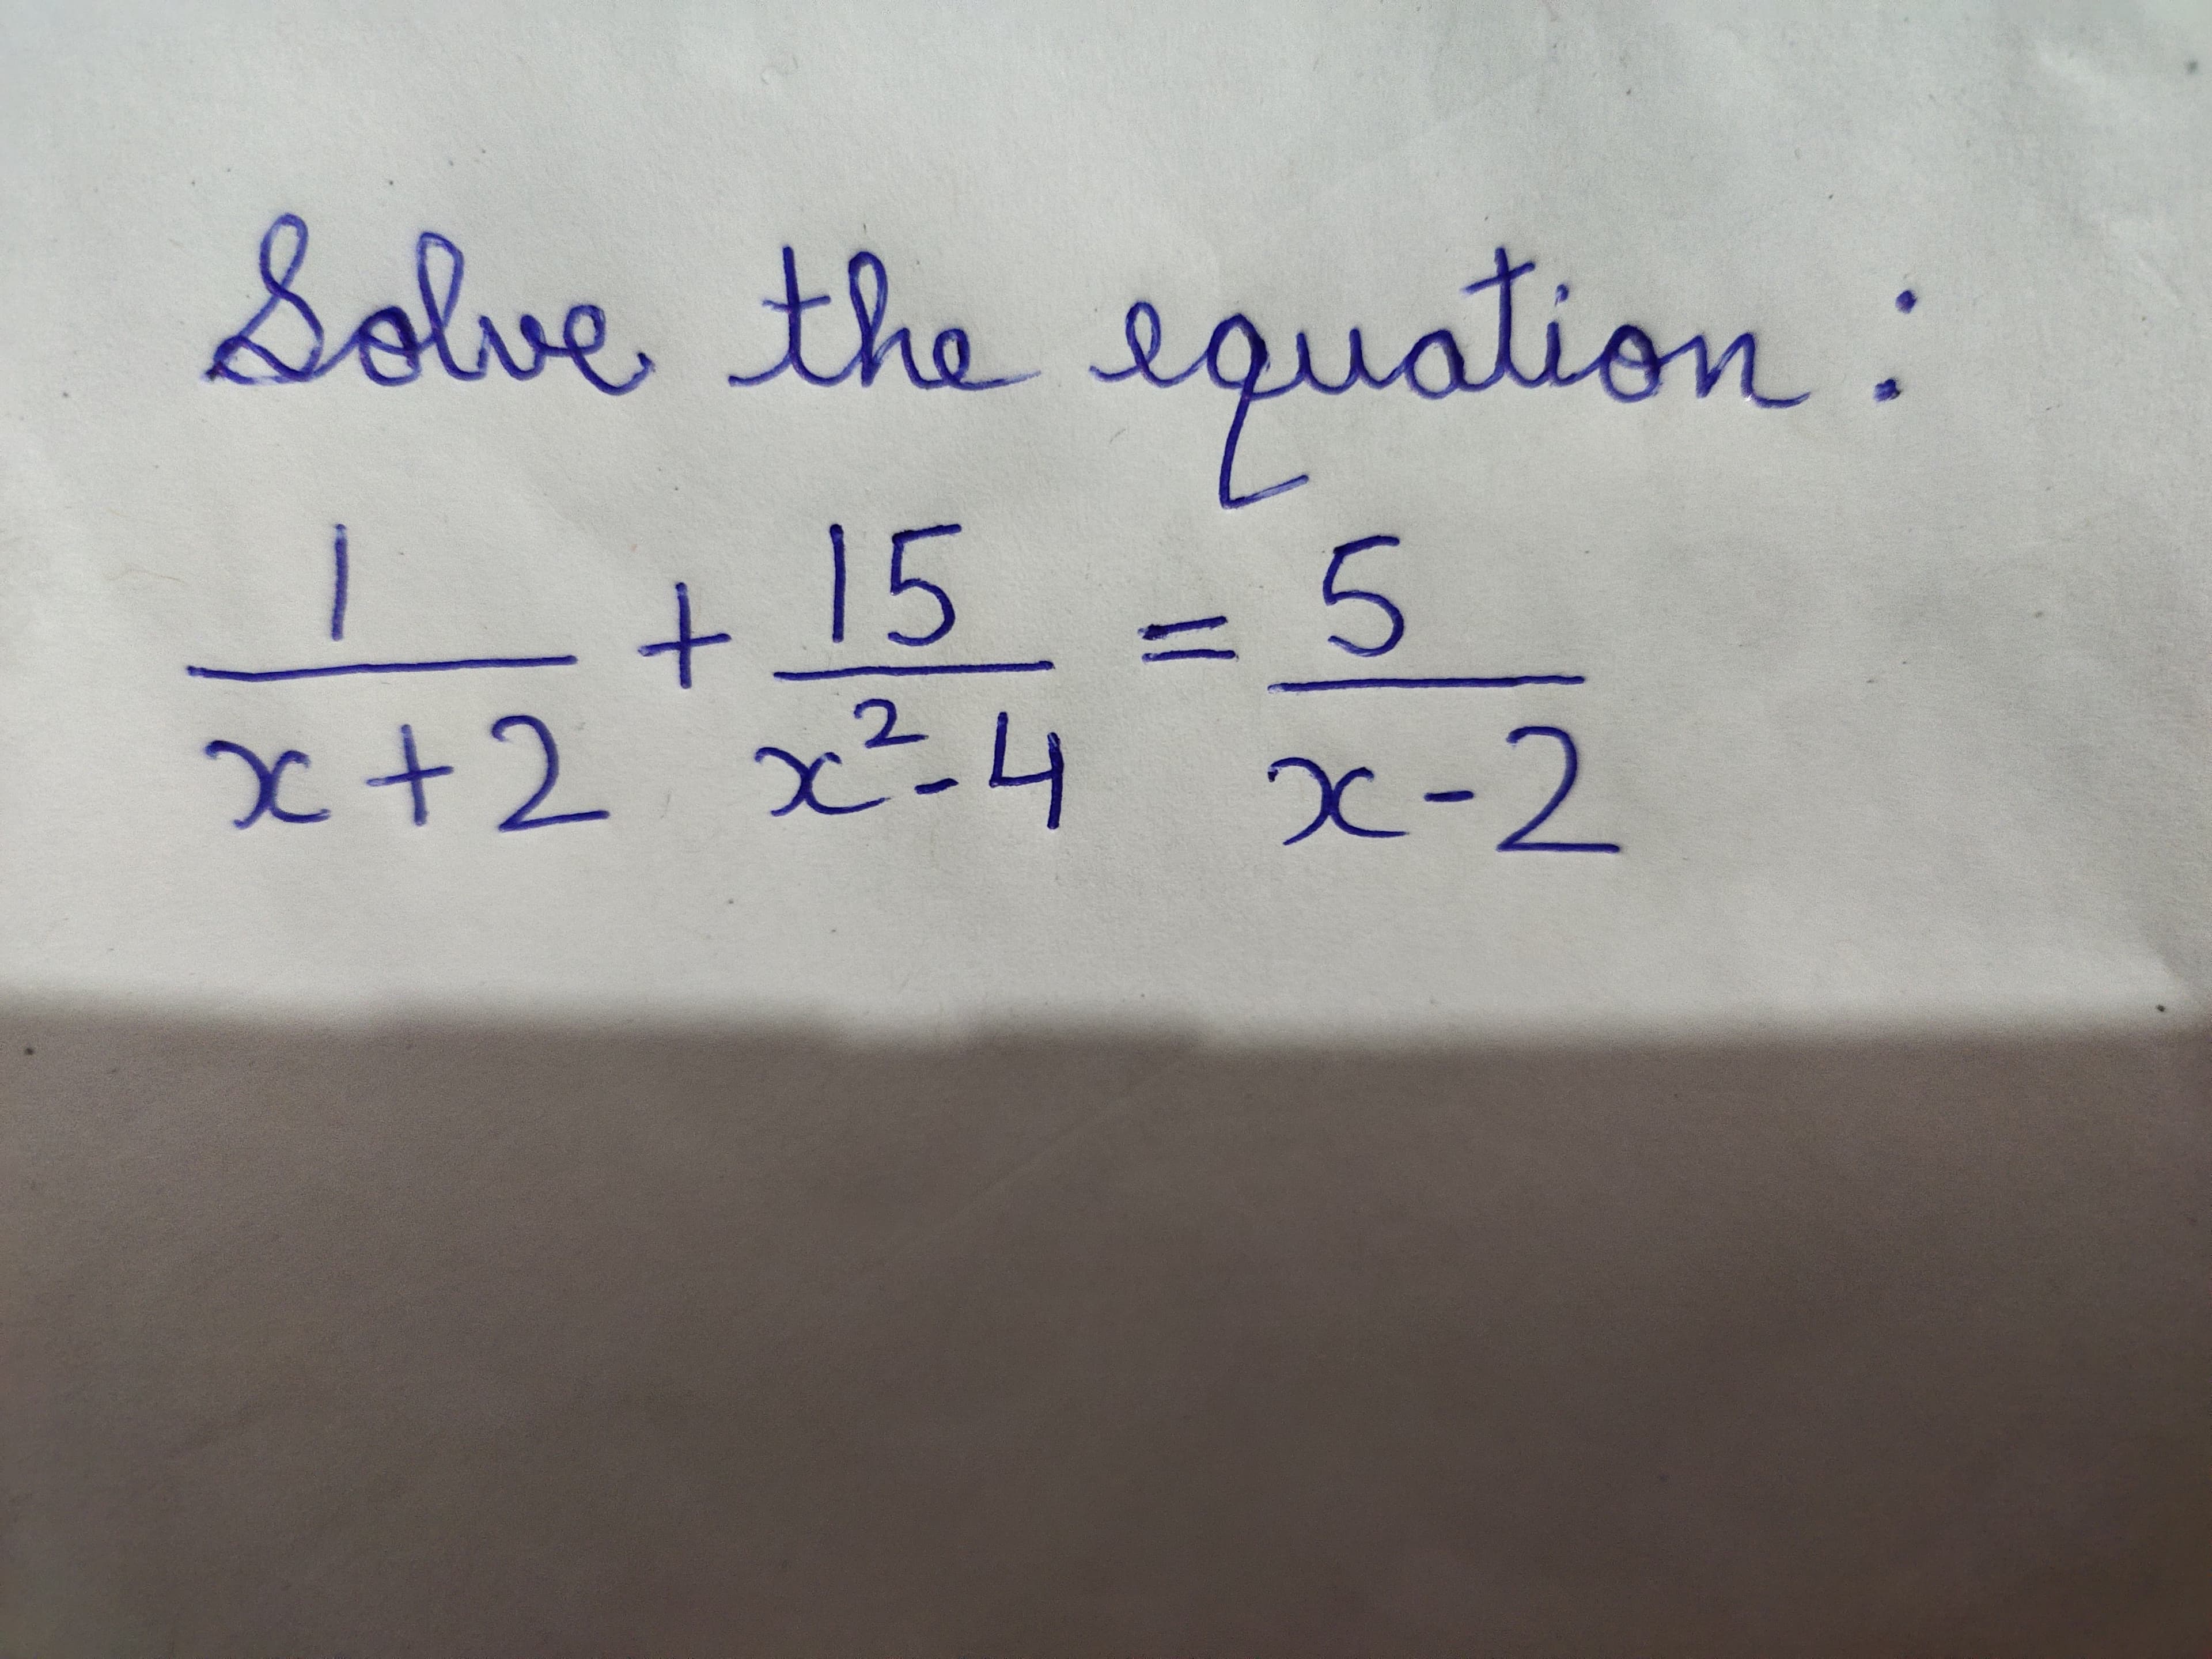 Solve the equation:
L+ 15 = 5
x2-L4
x+2 x² 4 x-2
